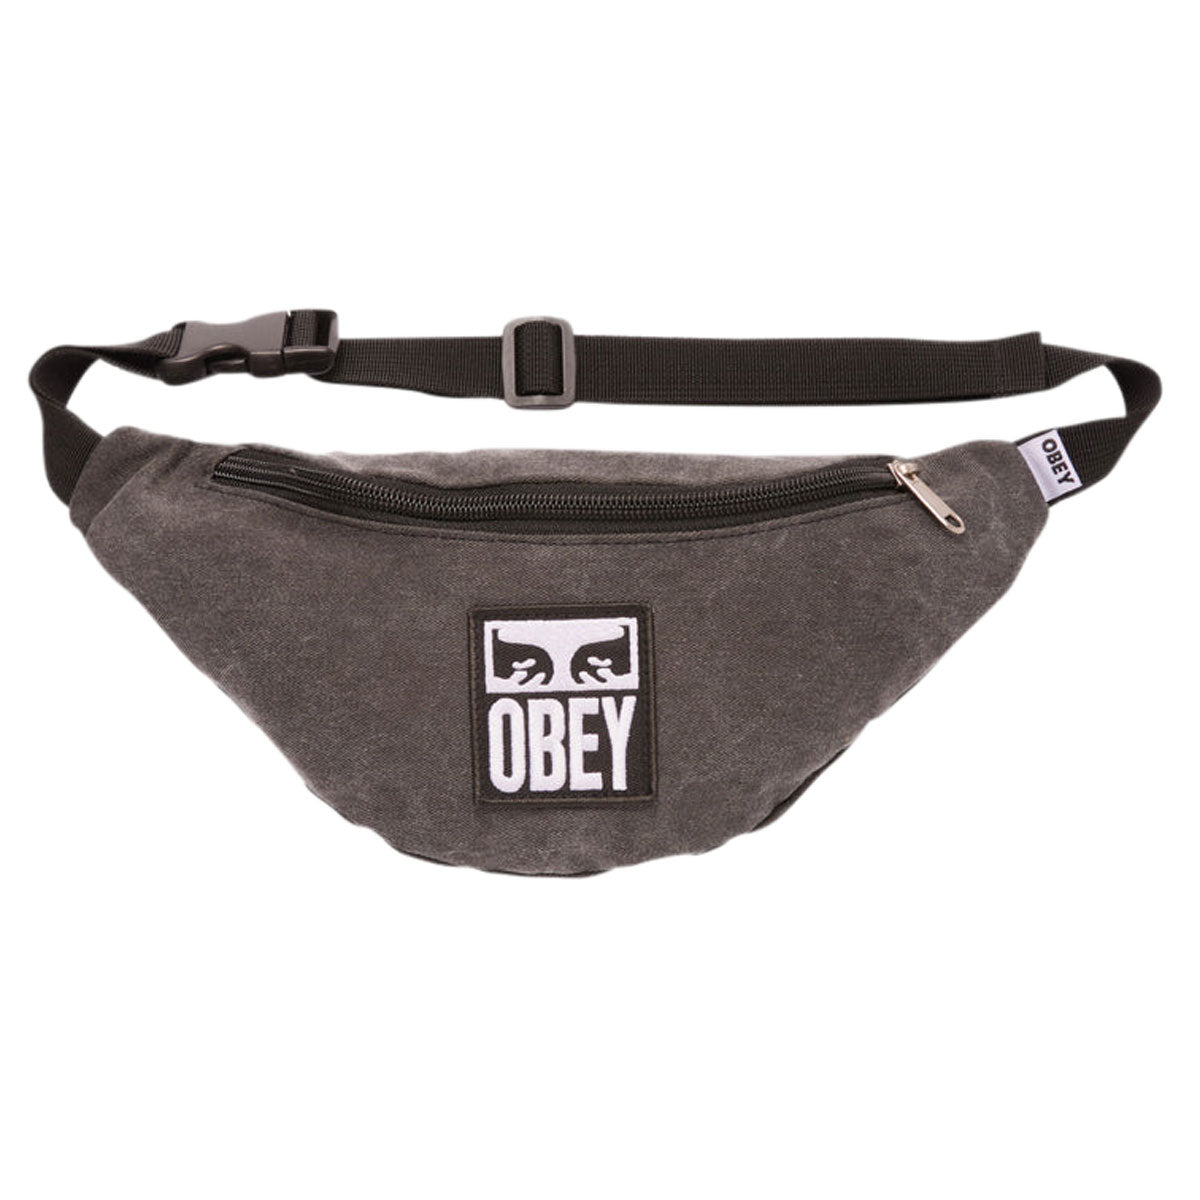 Obey Wasted Hip II Bag - Pigment Black image 1